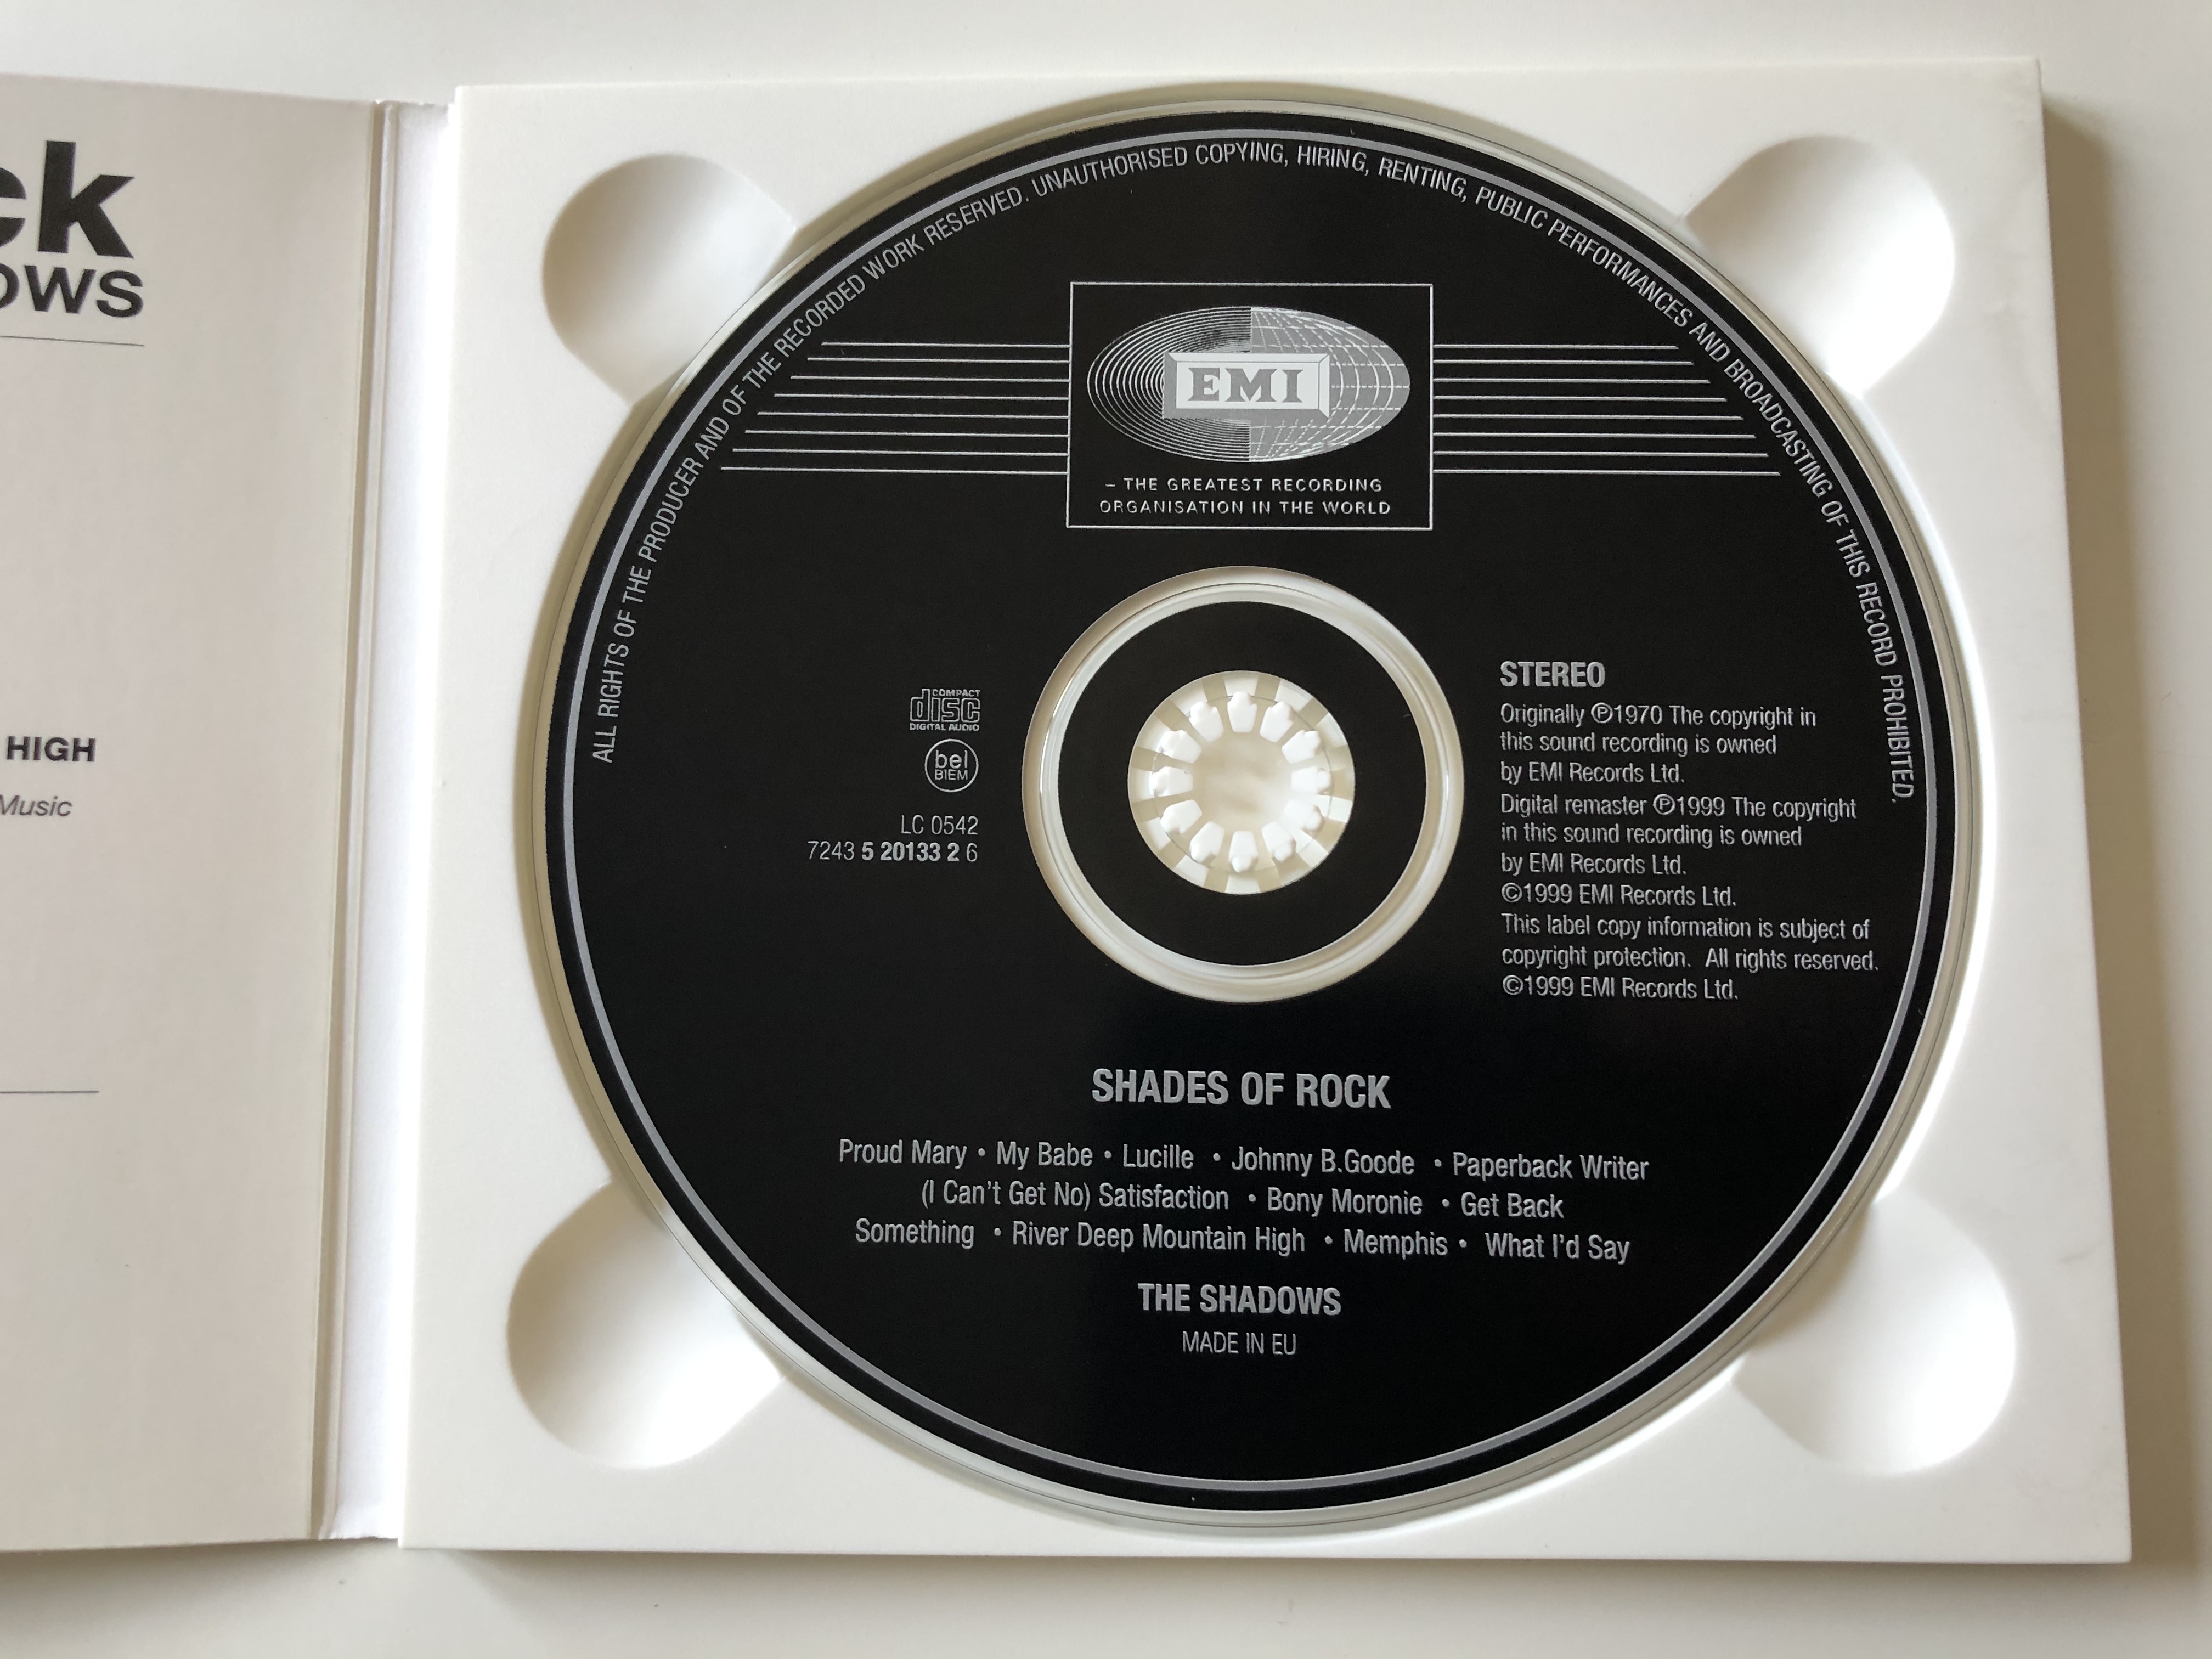 shades-of-rock-the-shadows-emi-audio-cd-1999-stereo-724352013326-3-.jpg